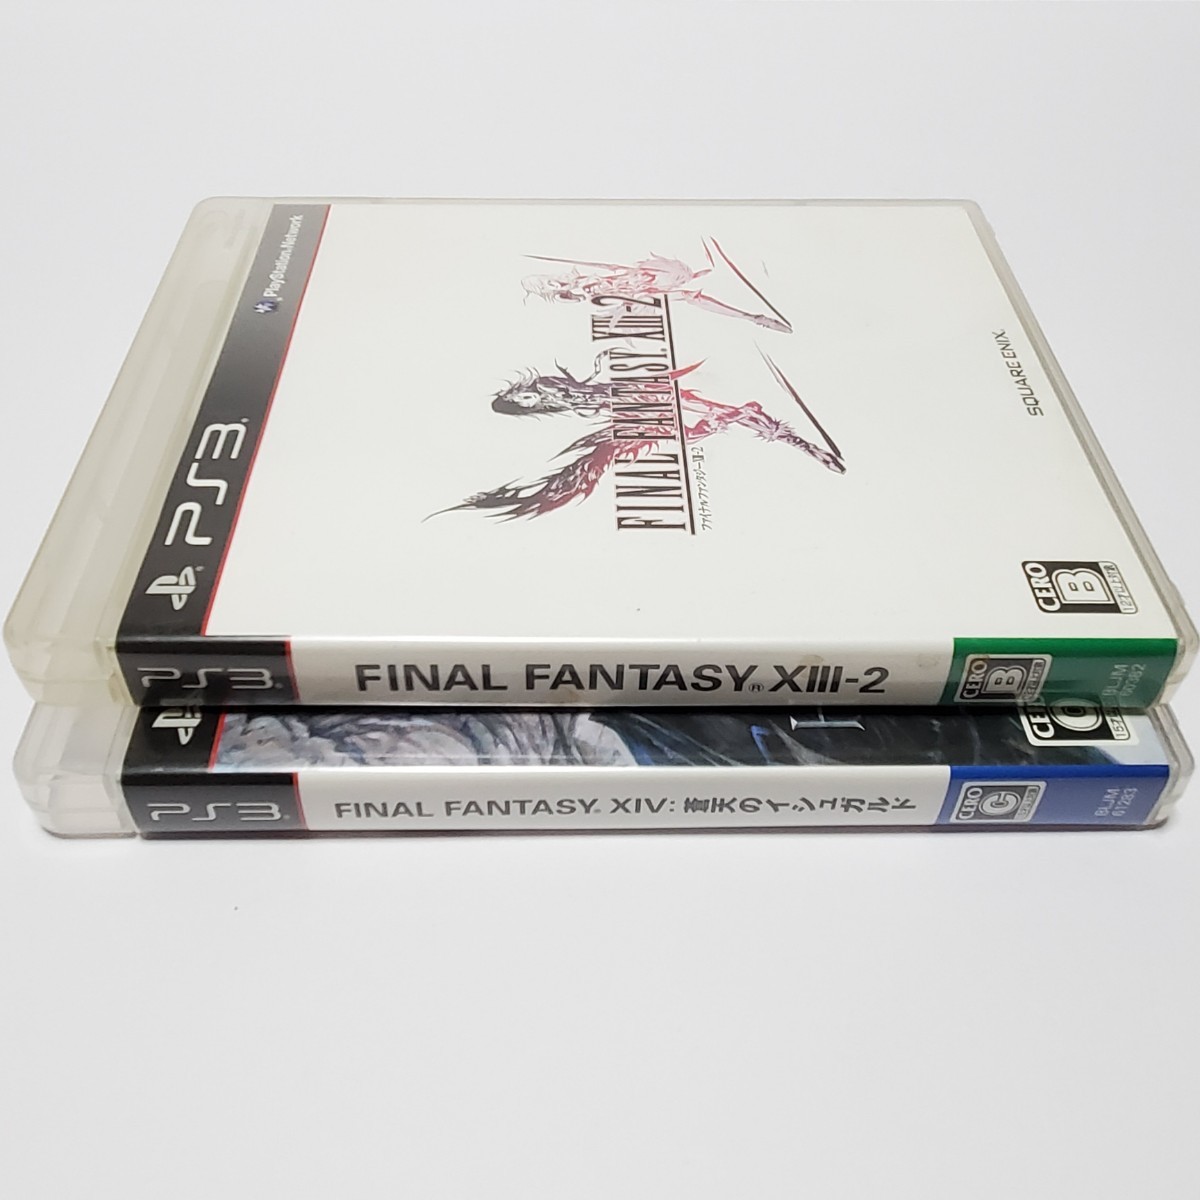 【PS3ソフト】 ファイナルファンタジー13-2 + ファイナルファンタジー14 蒼天のイシュガルド 2組セット ユーズド品_画像3